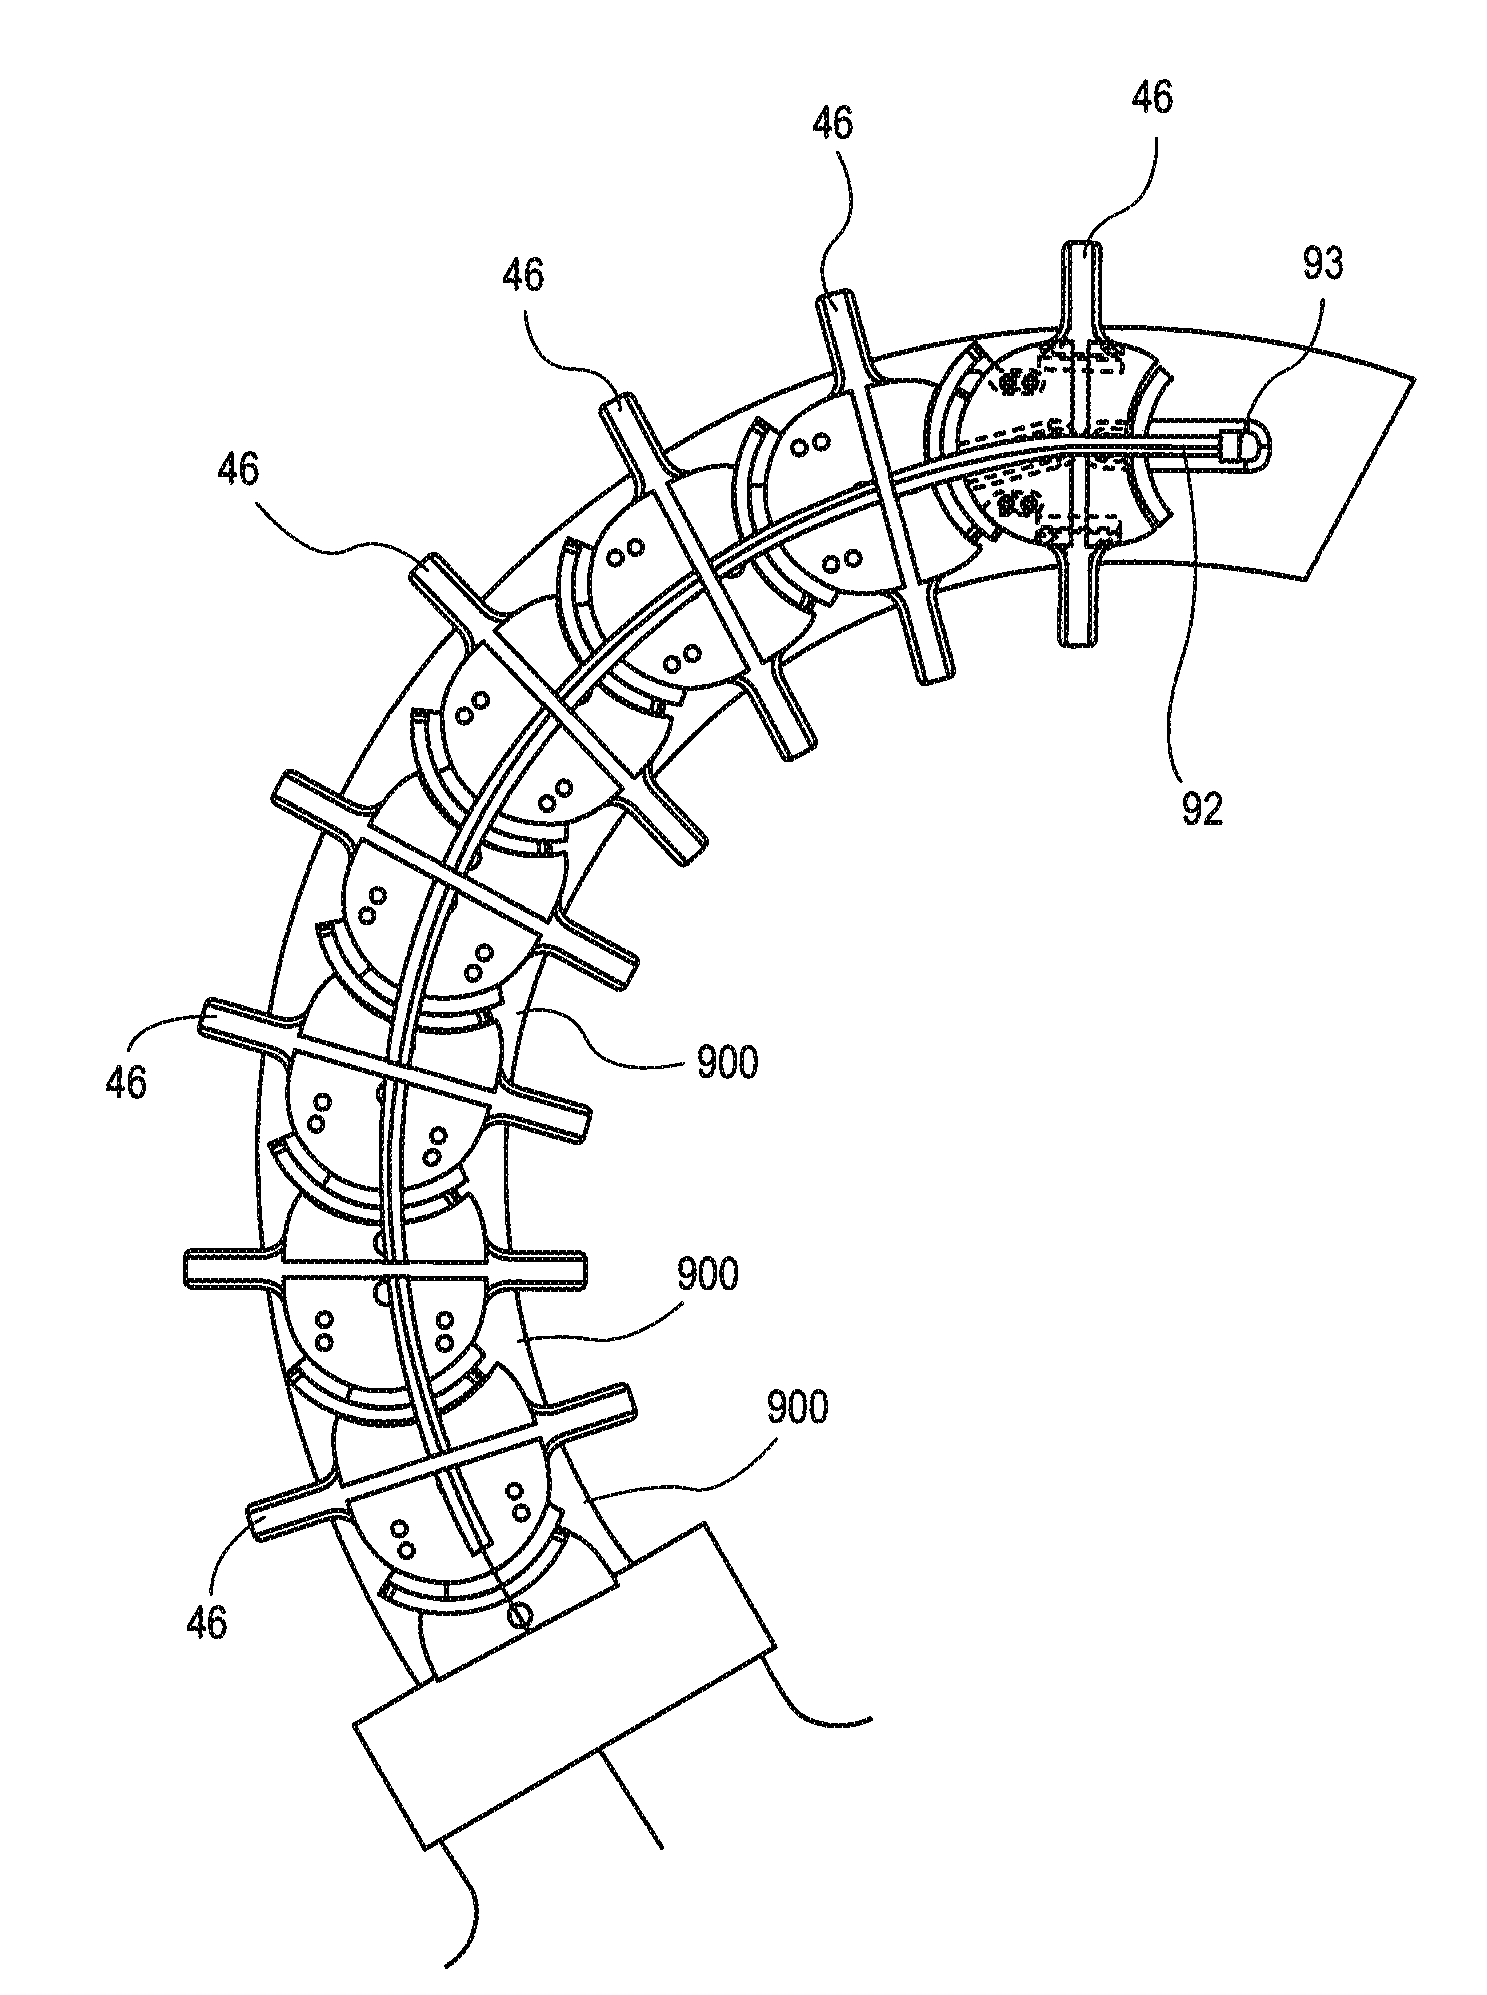 Segmented instrument having braking capabilities